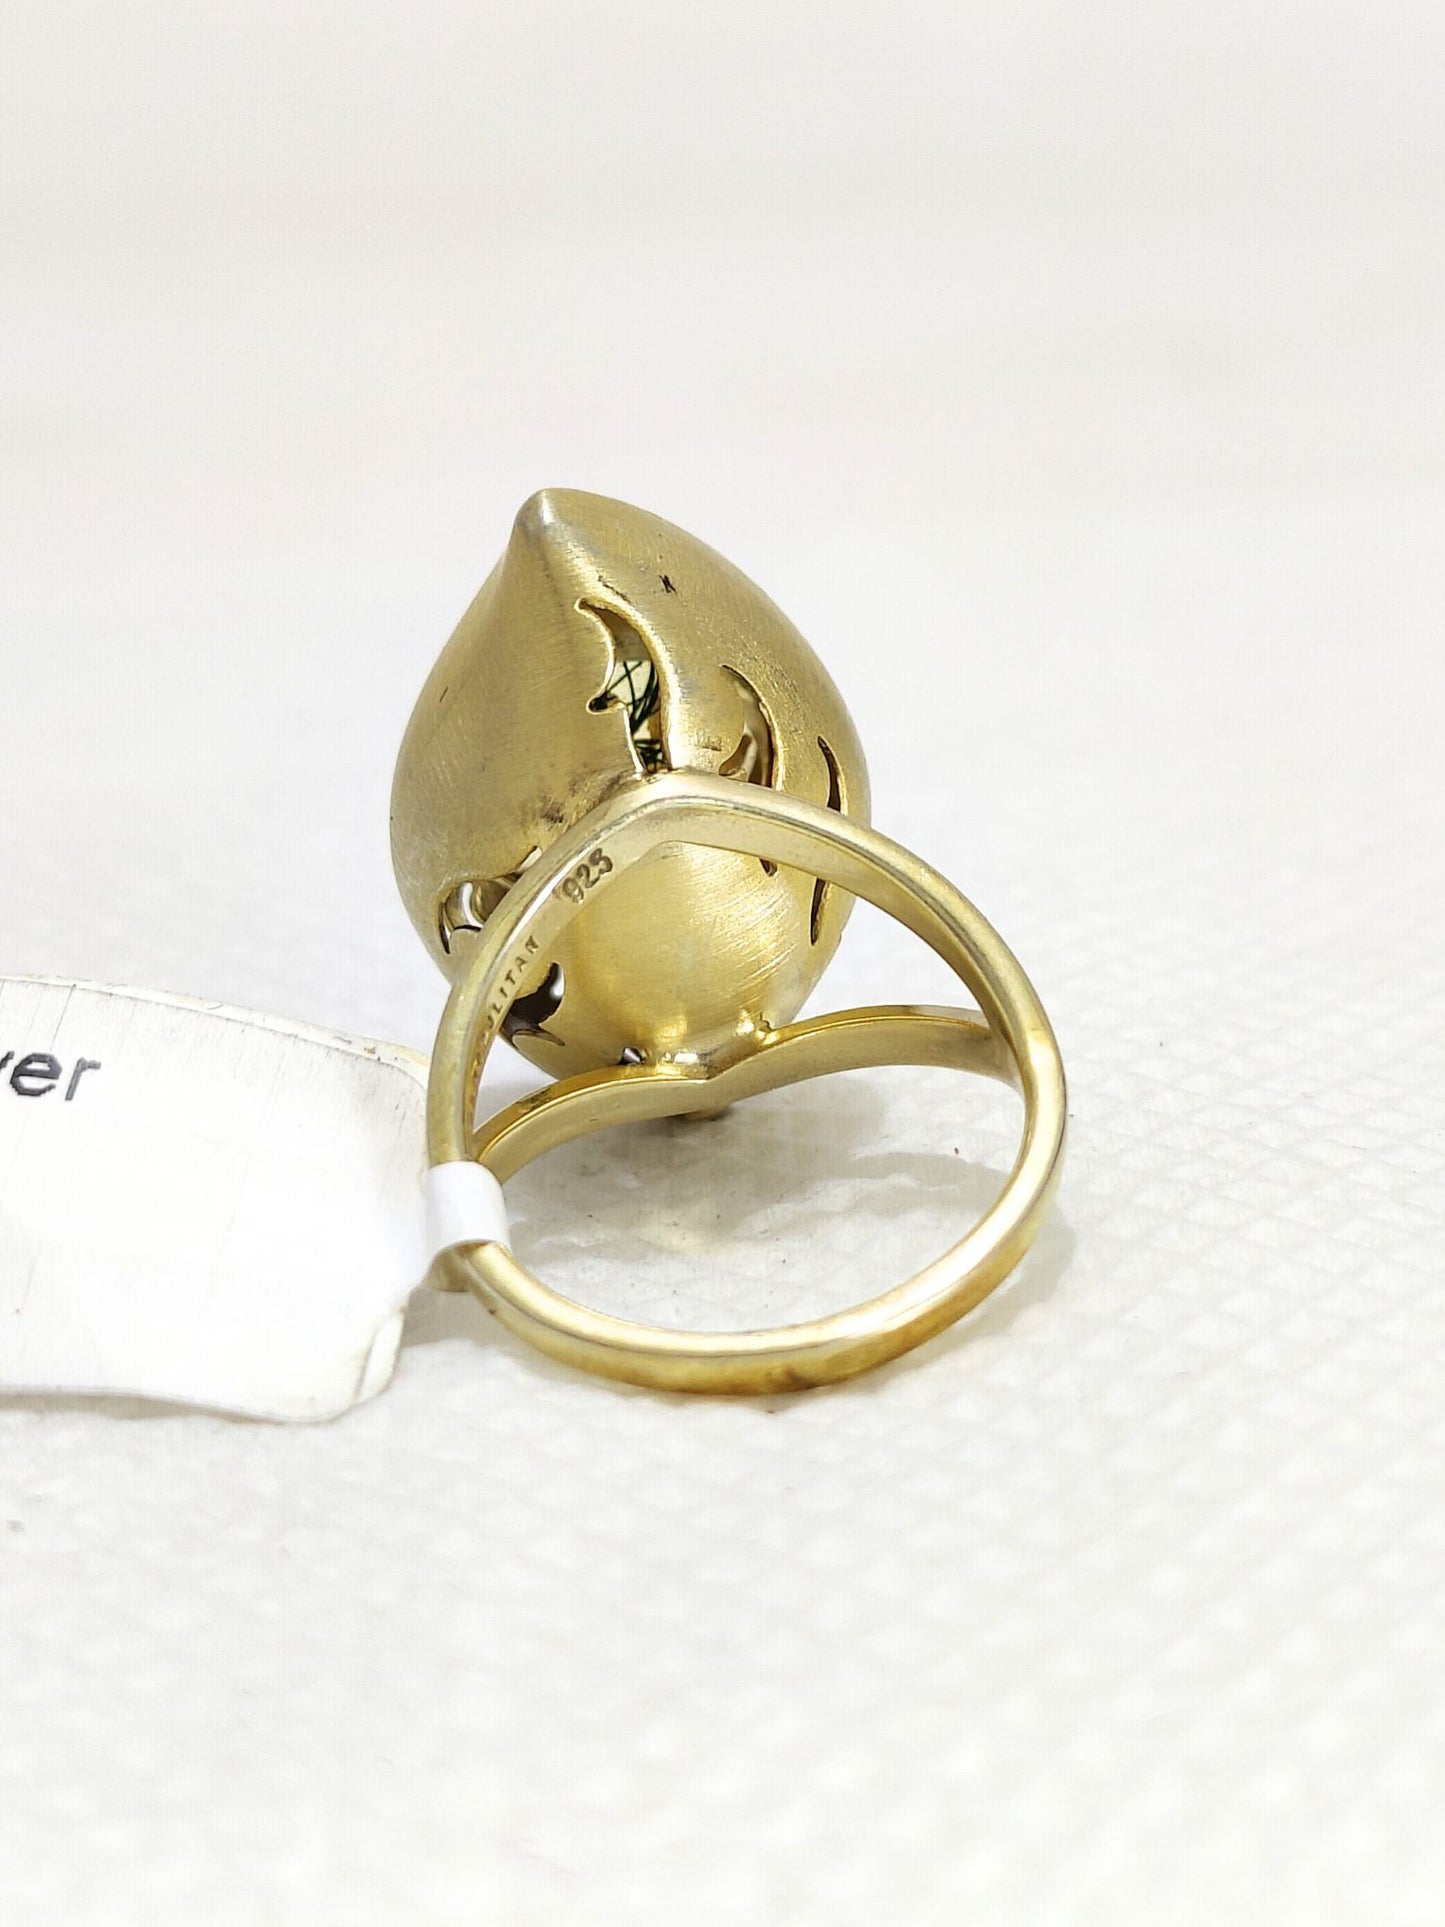 Handmade Tiny Yellow Pressed Flower Ring